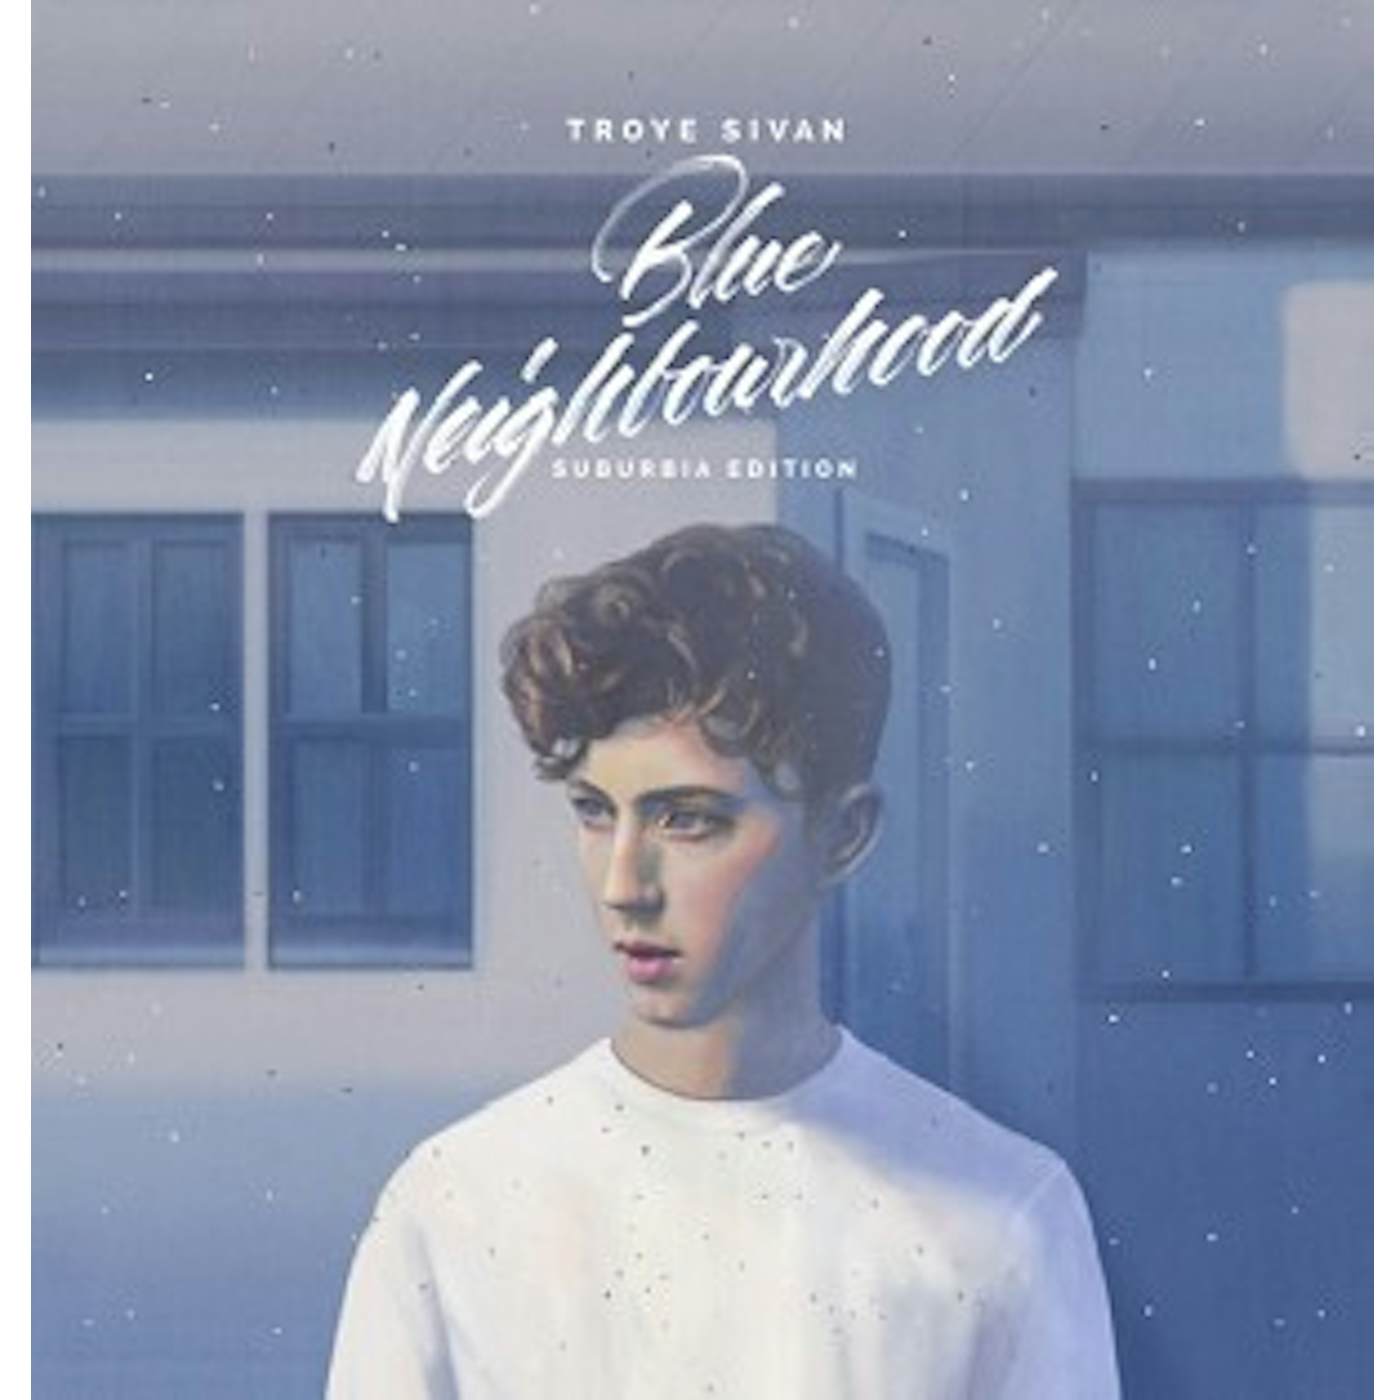 Troye Sivan BLUE NEIGHBOURHOOD: SUBURBIA EDITION CD (Australian Deluxe Edition)